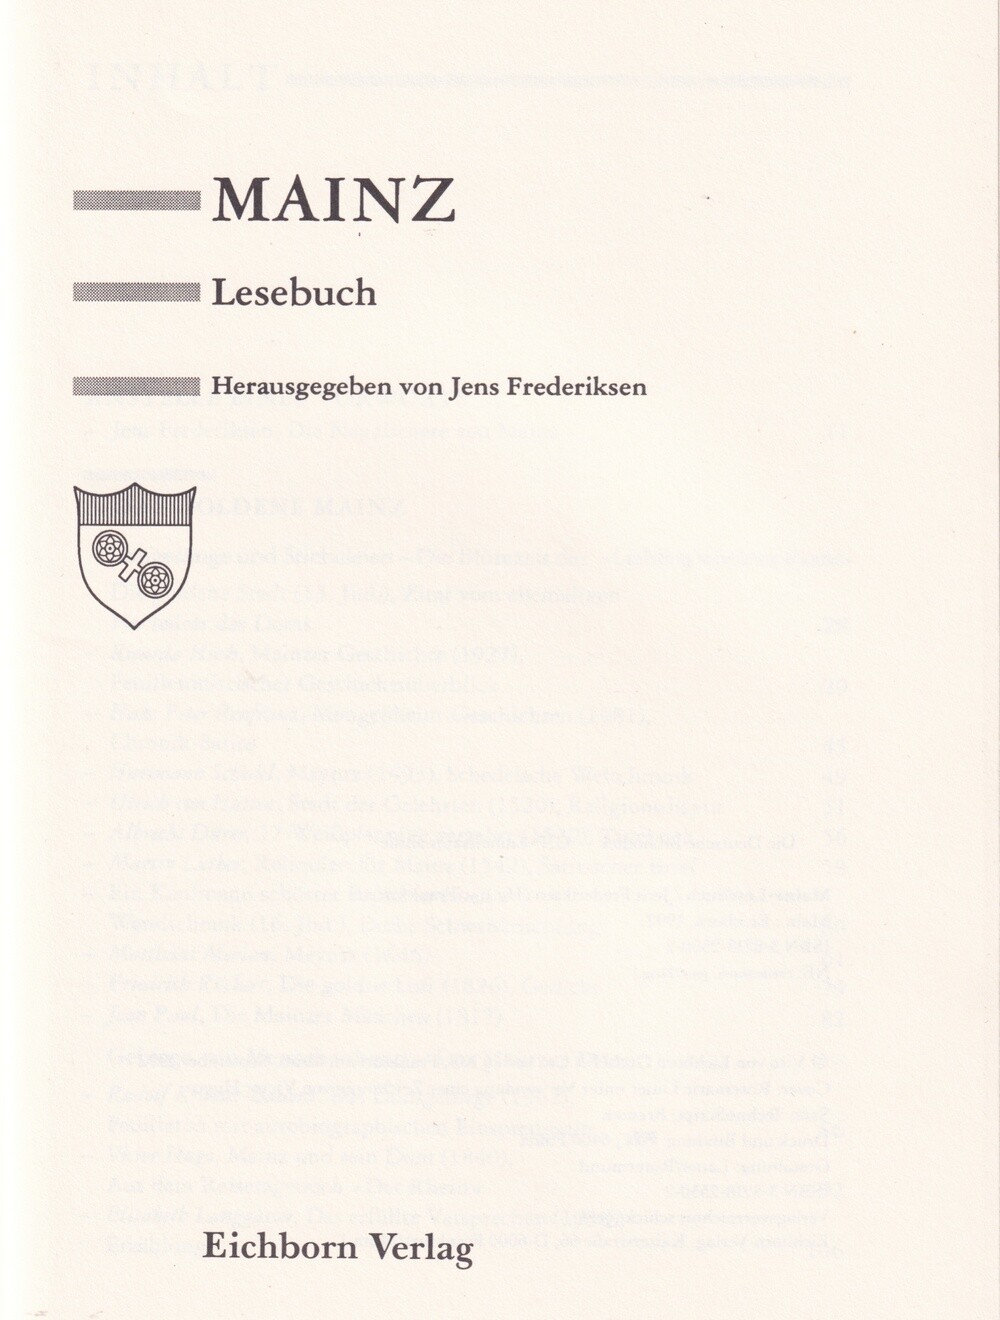 Mainz Lesebuch (1992) (Kulturverein Guntersblum CC BY-NC-SA)